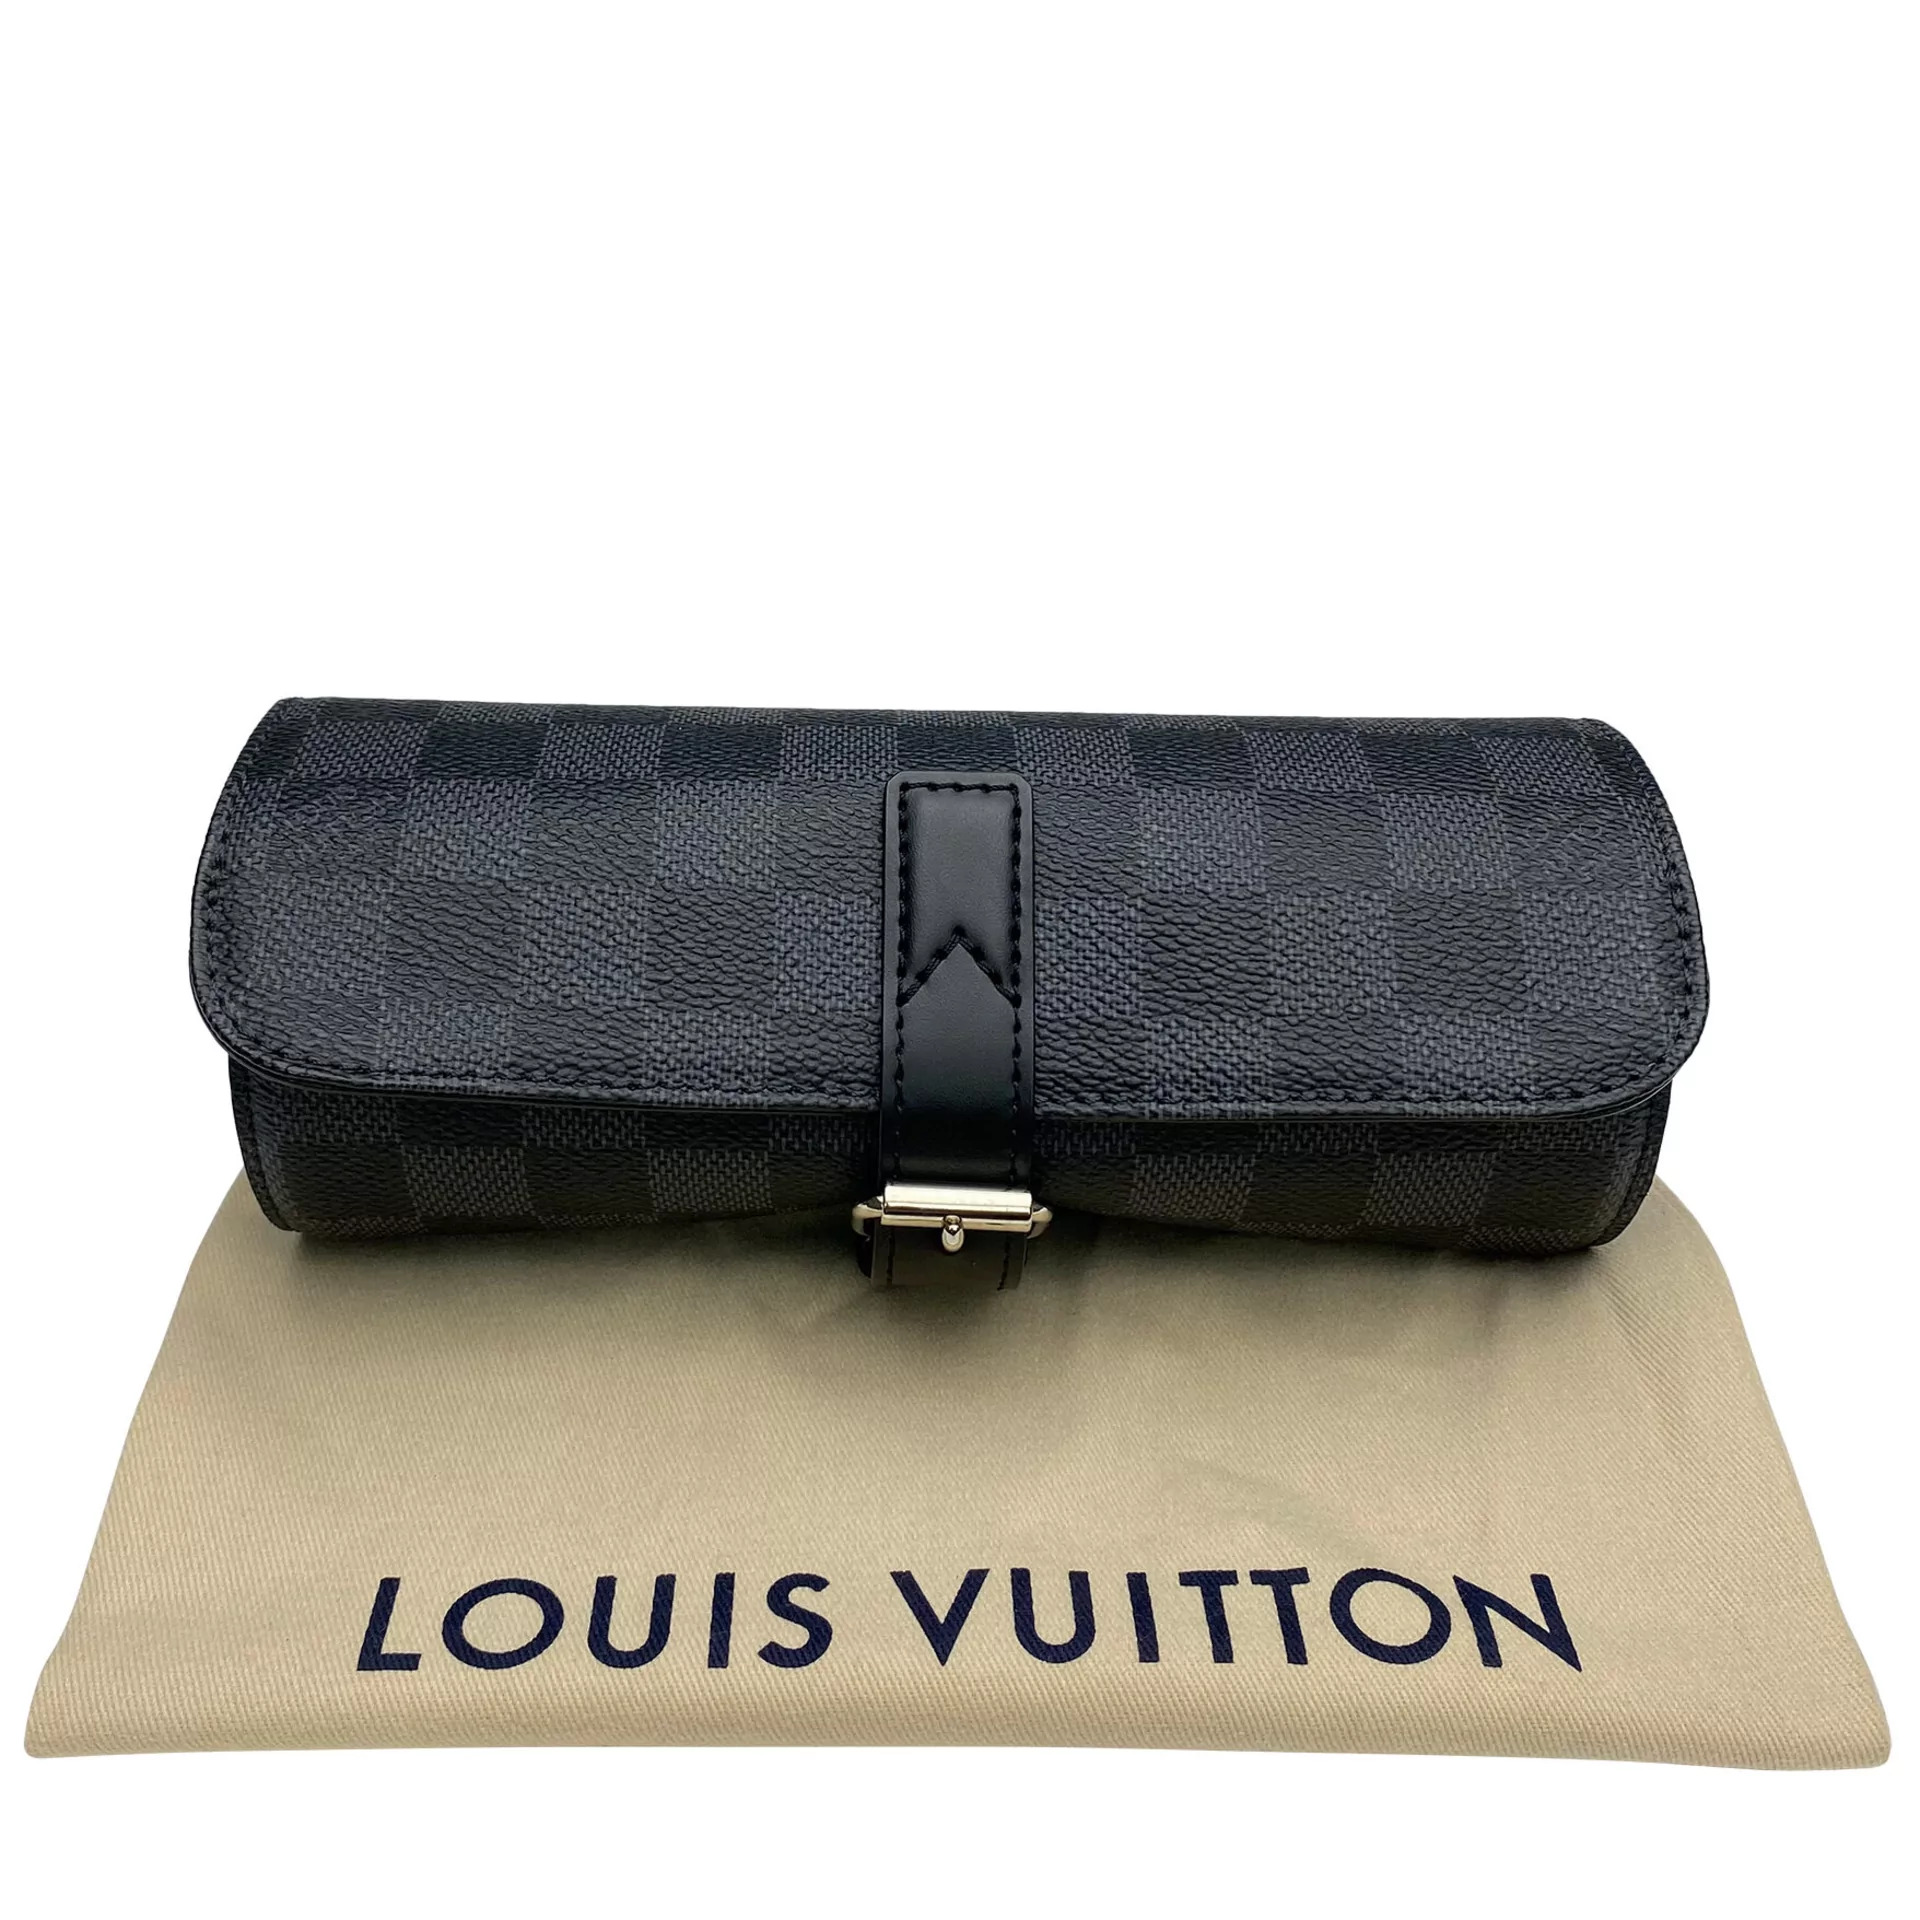 Estojo Louis Vuitton original, (usado) -med. 20cm